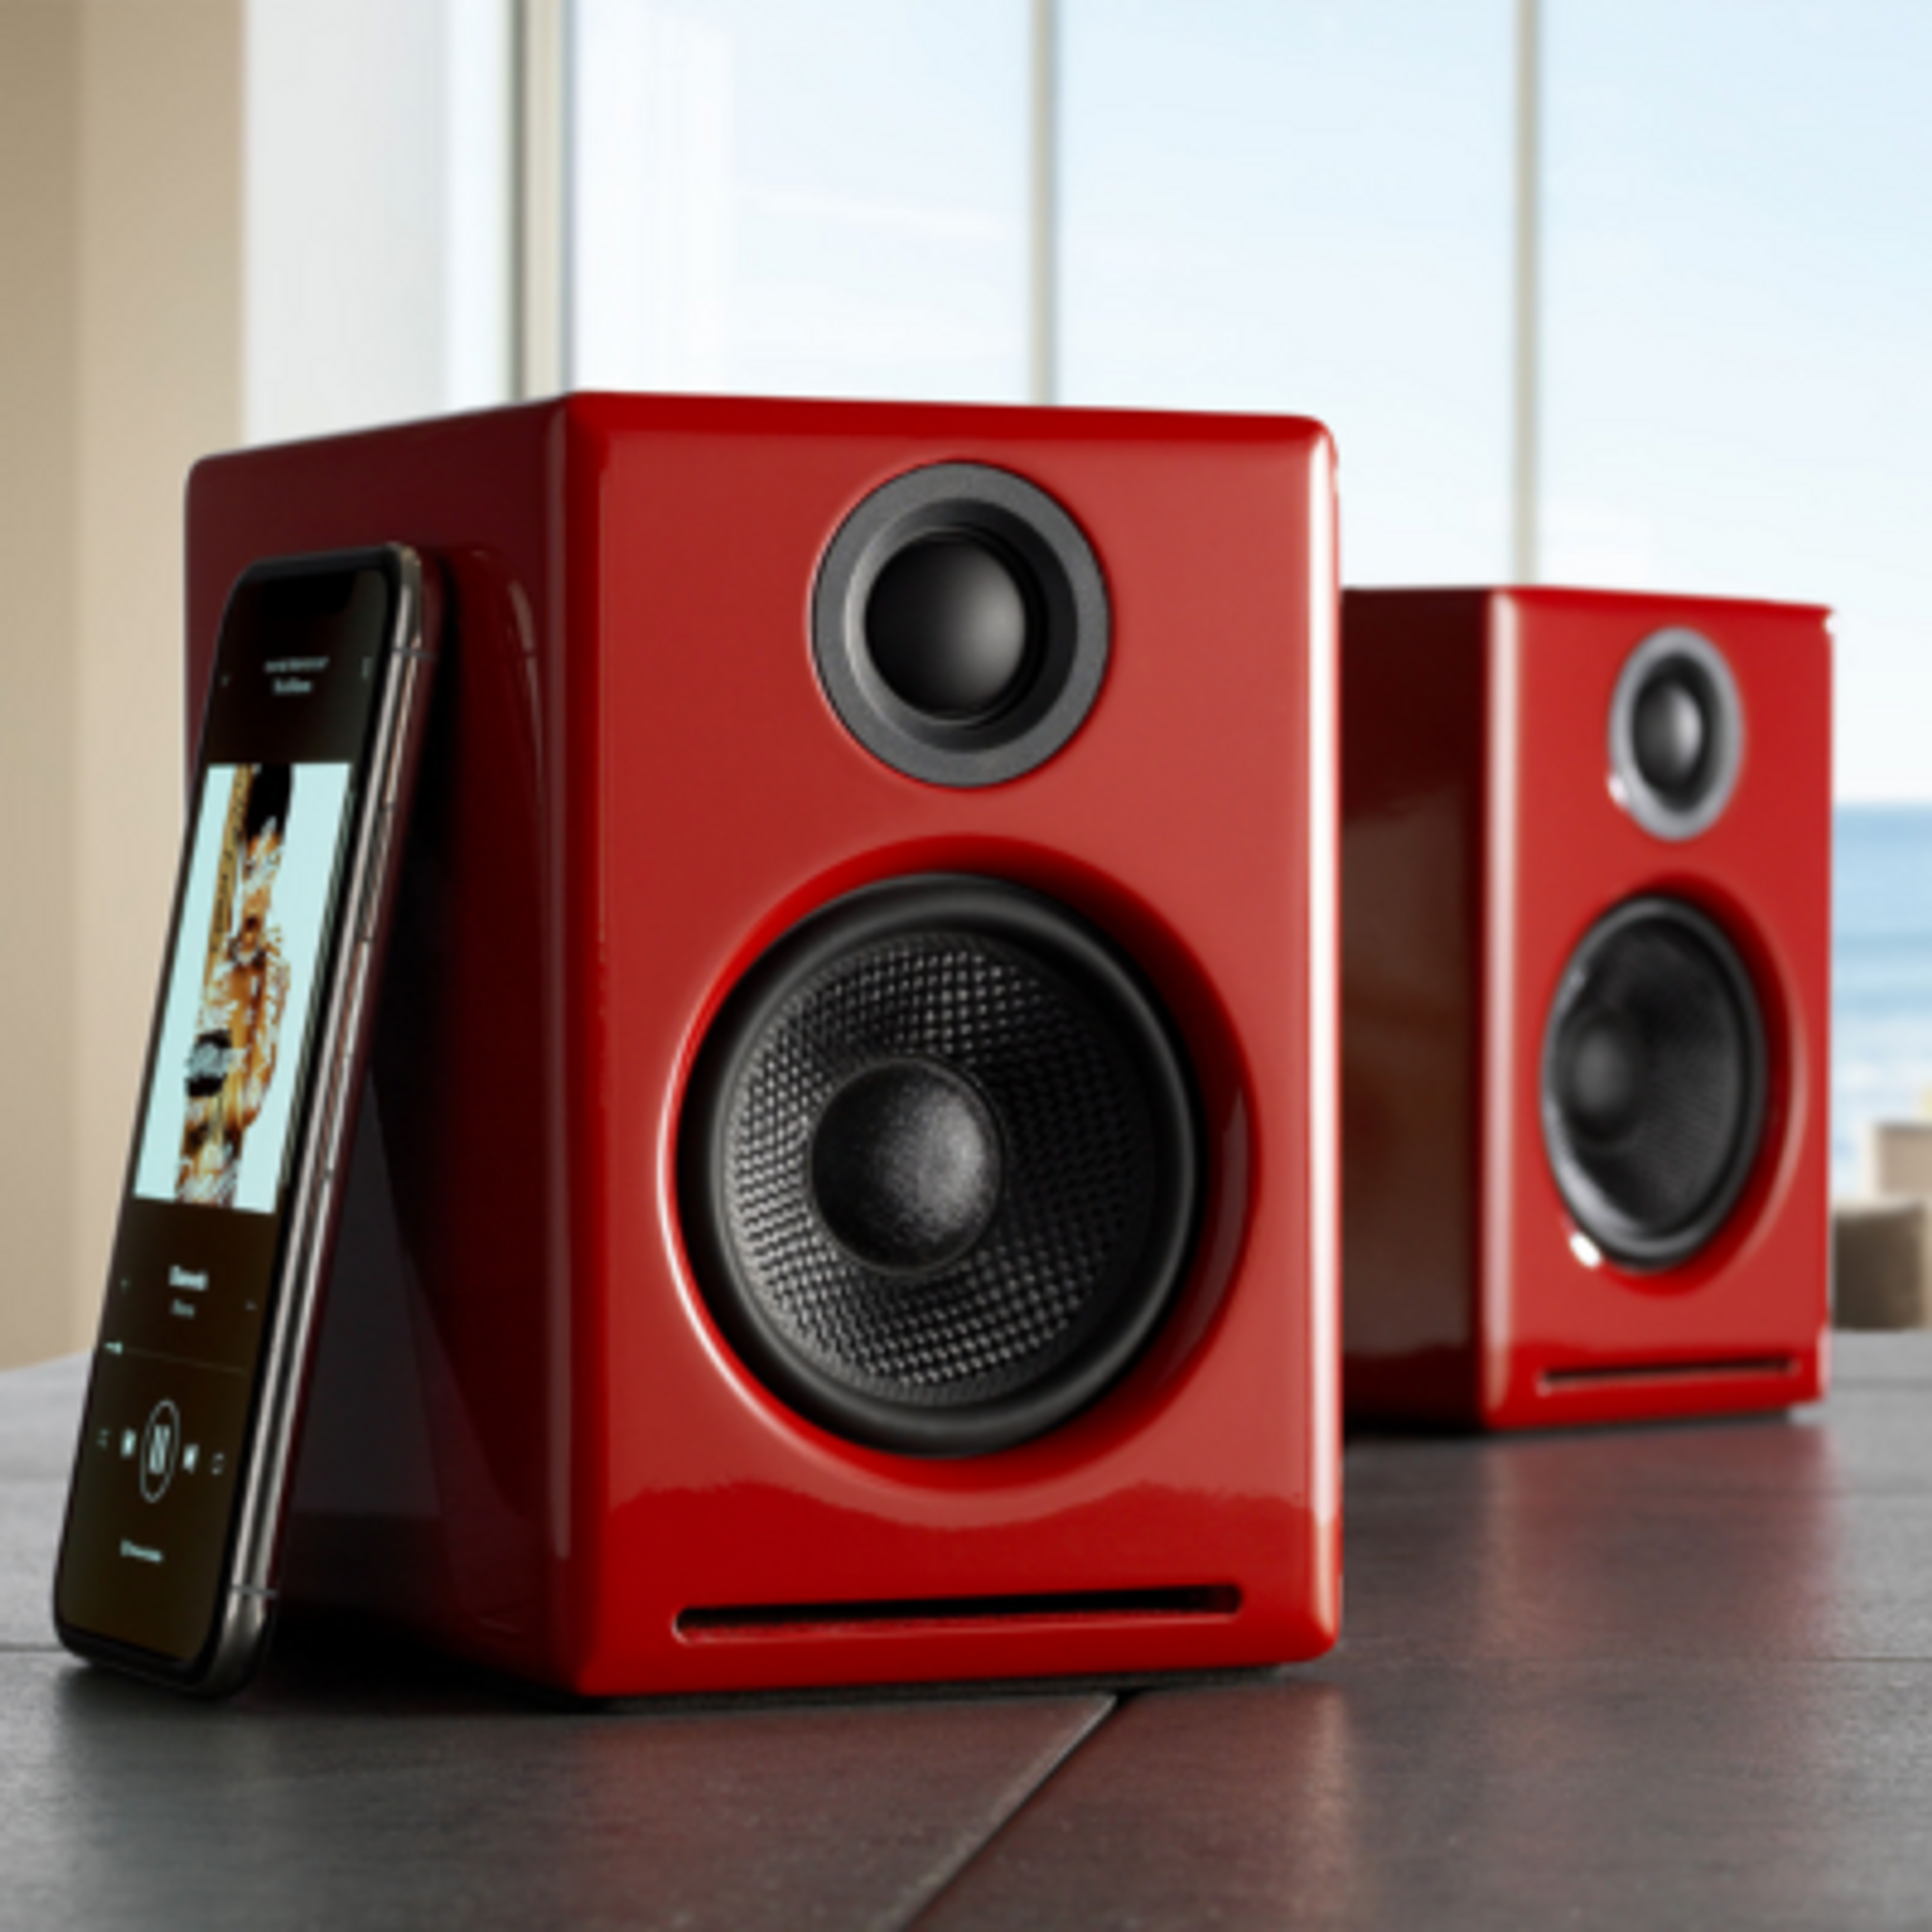 A2+ Home Music System w/ Bluetooth aptX